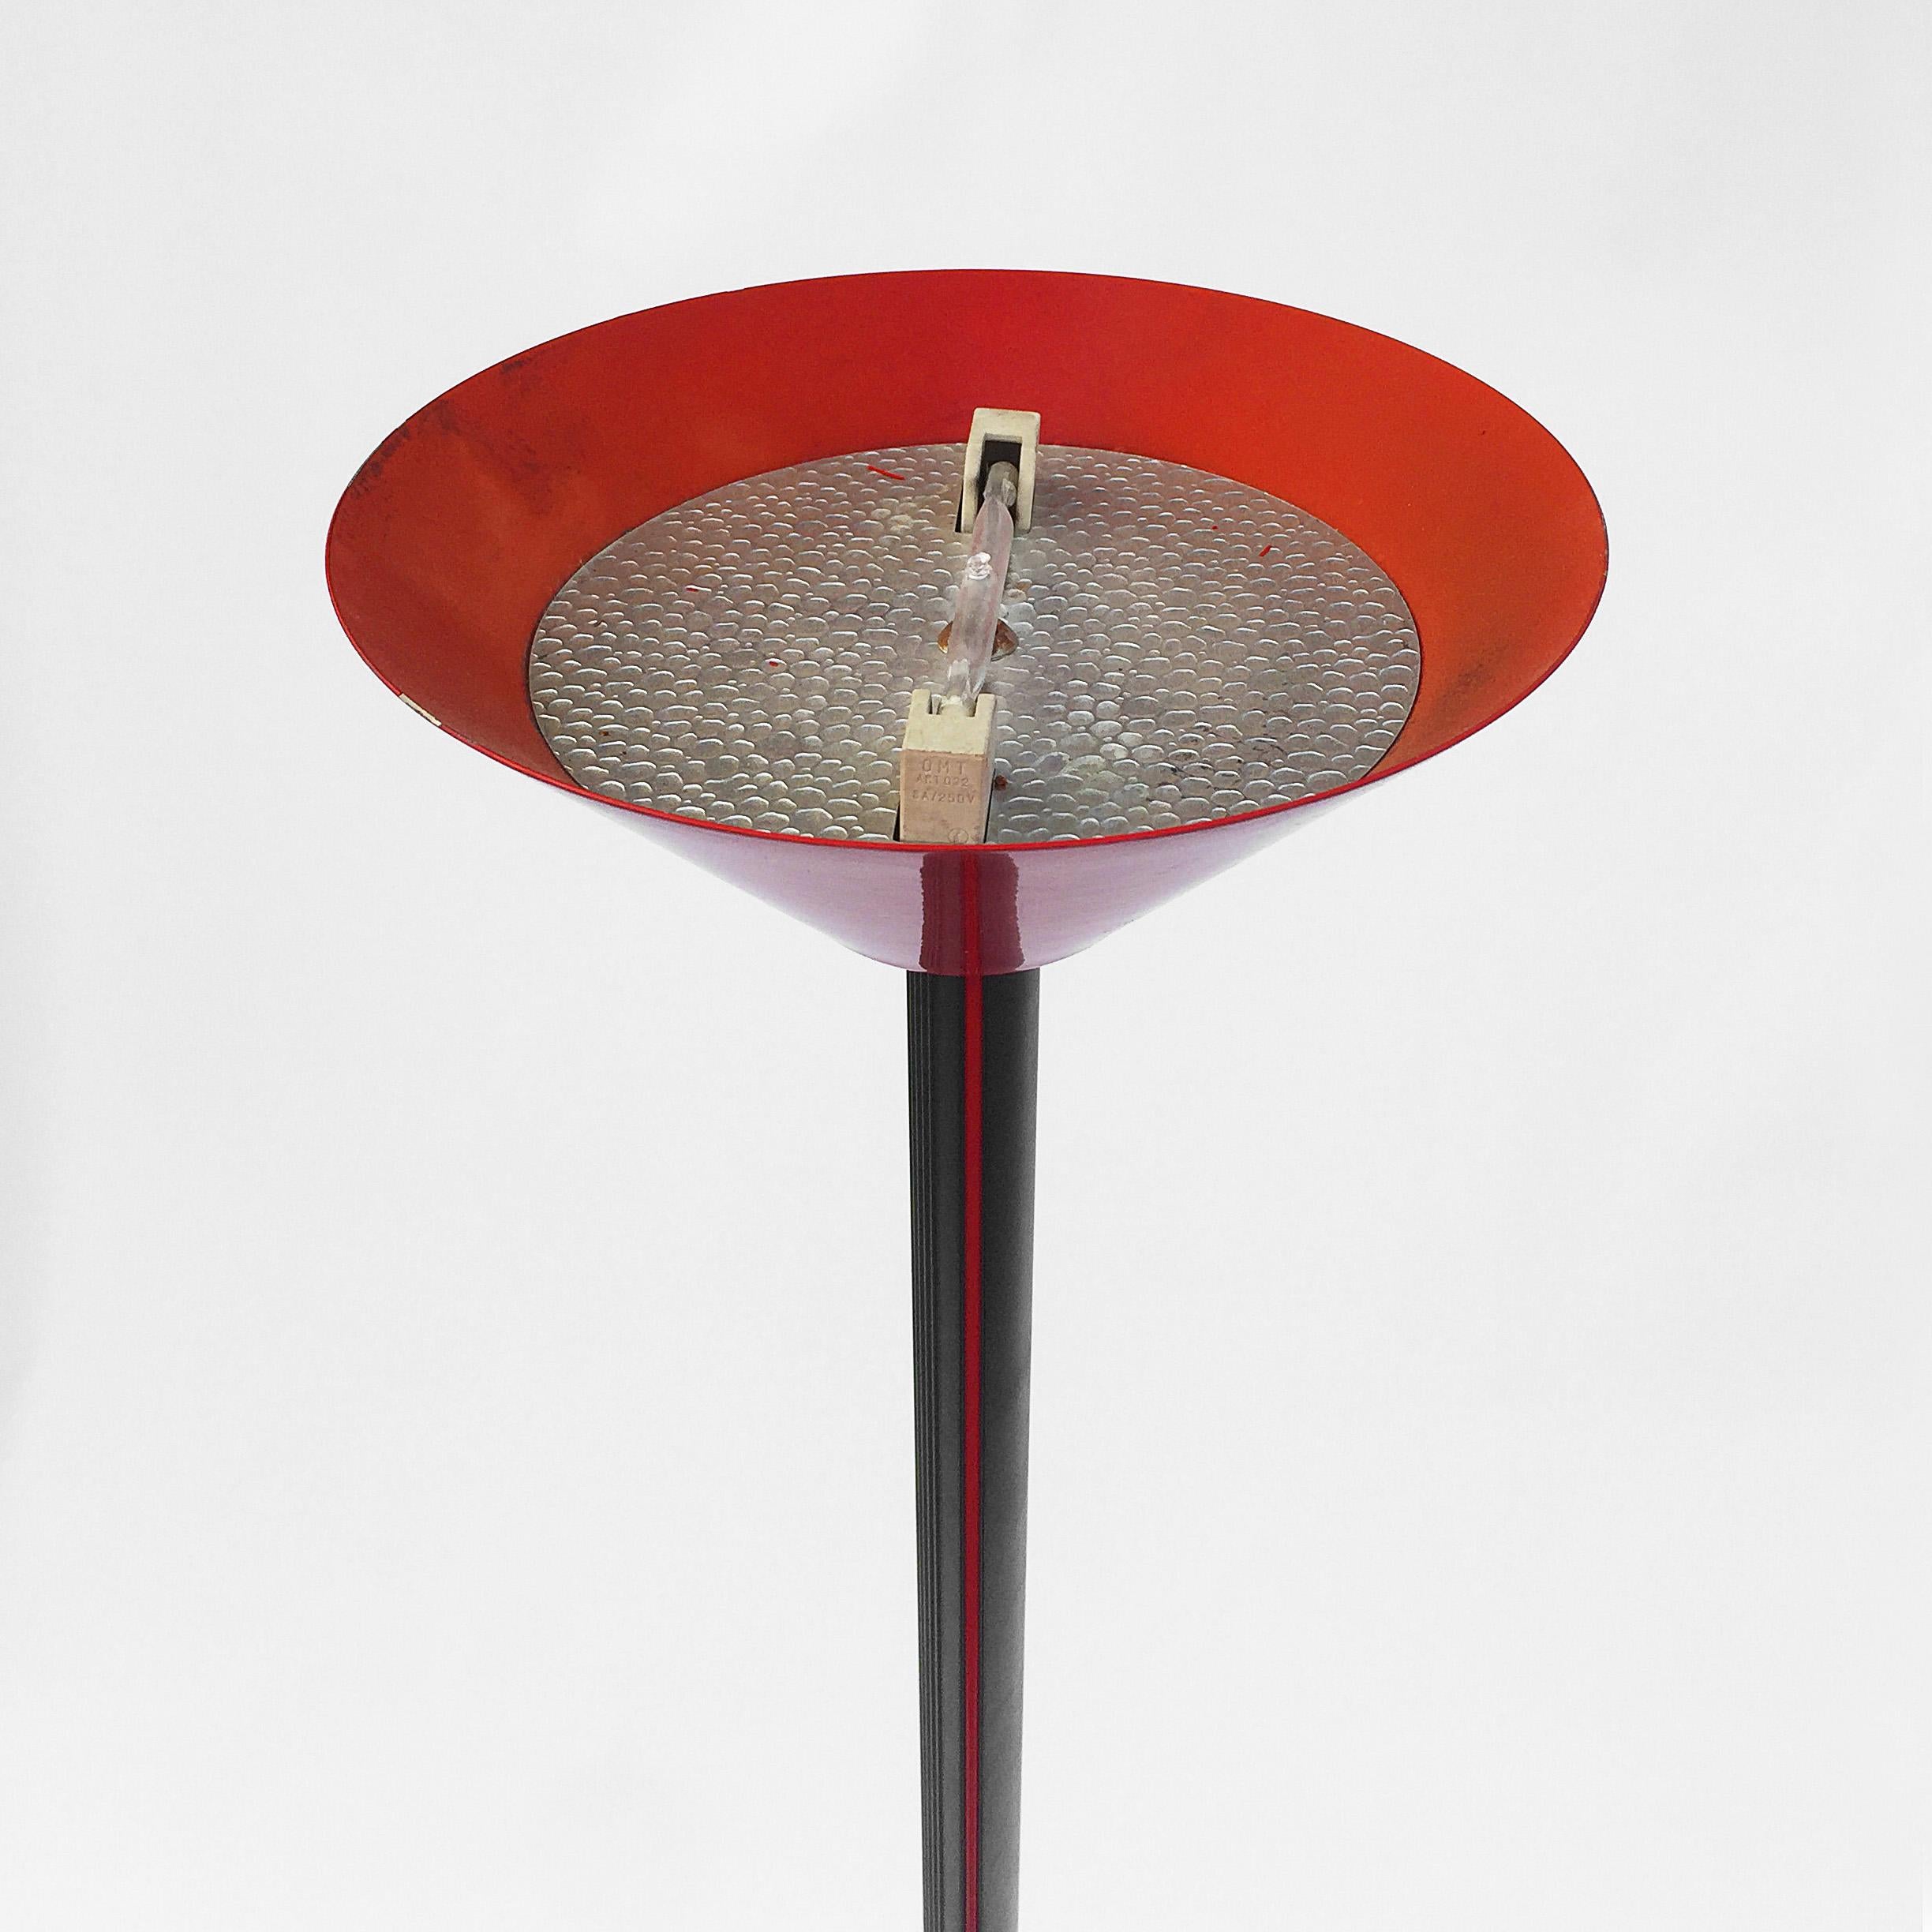 British Memphis Inspired Uplighters 1980s Floor Lamp Red Black Postmodern Sottsass Style For Sale